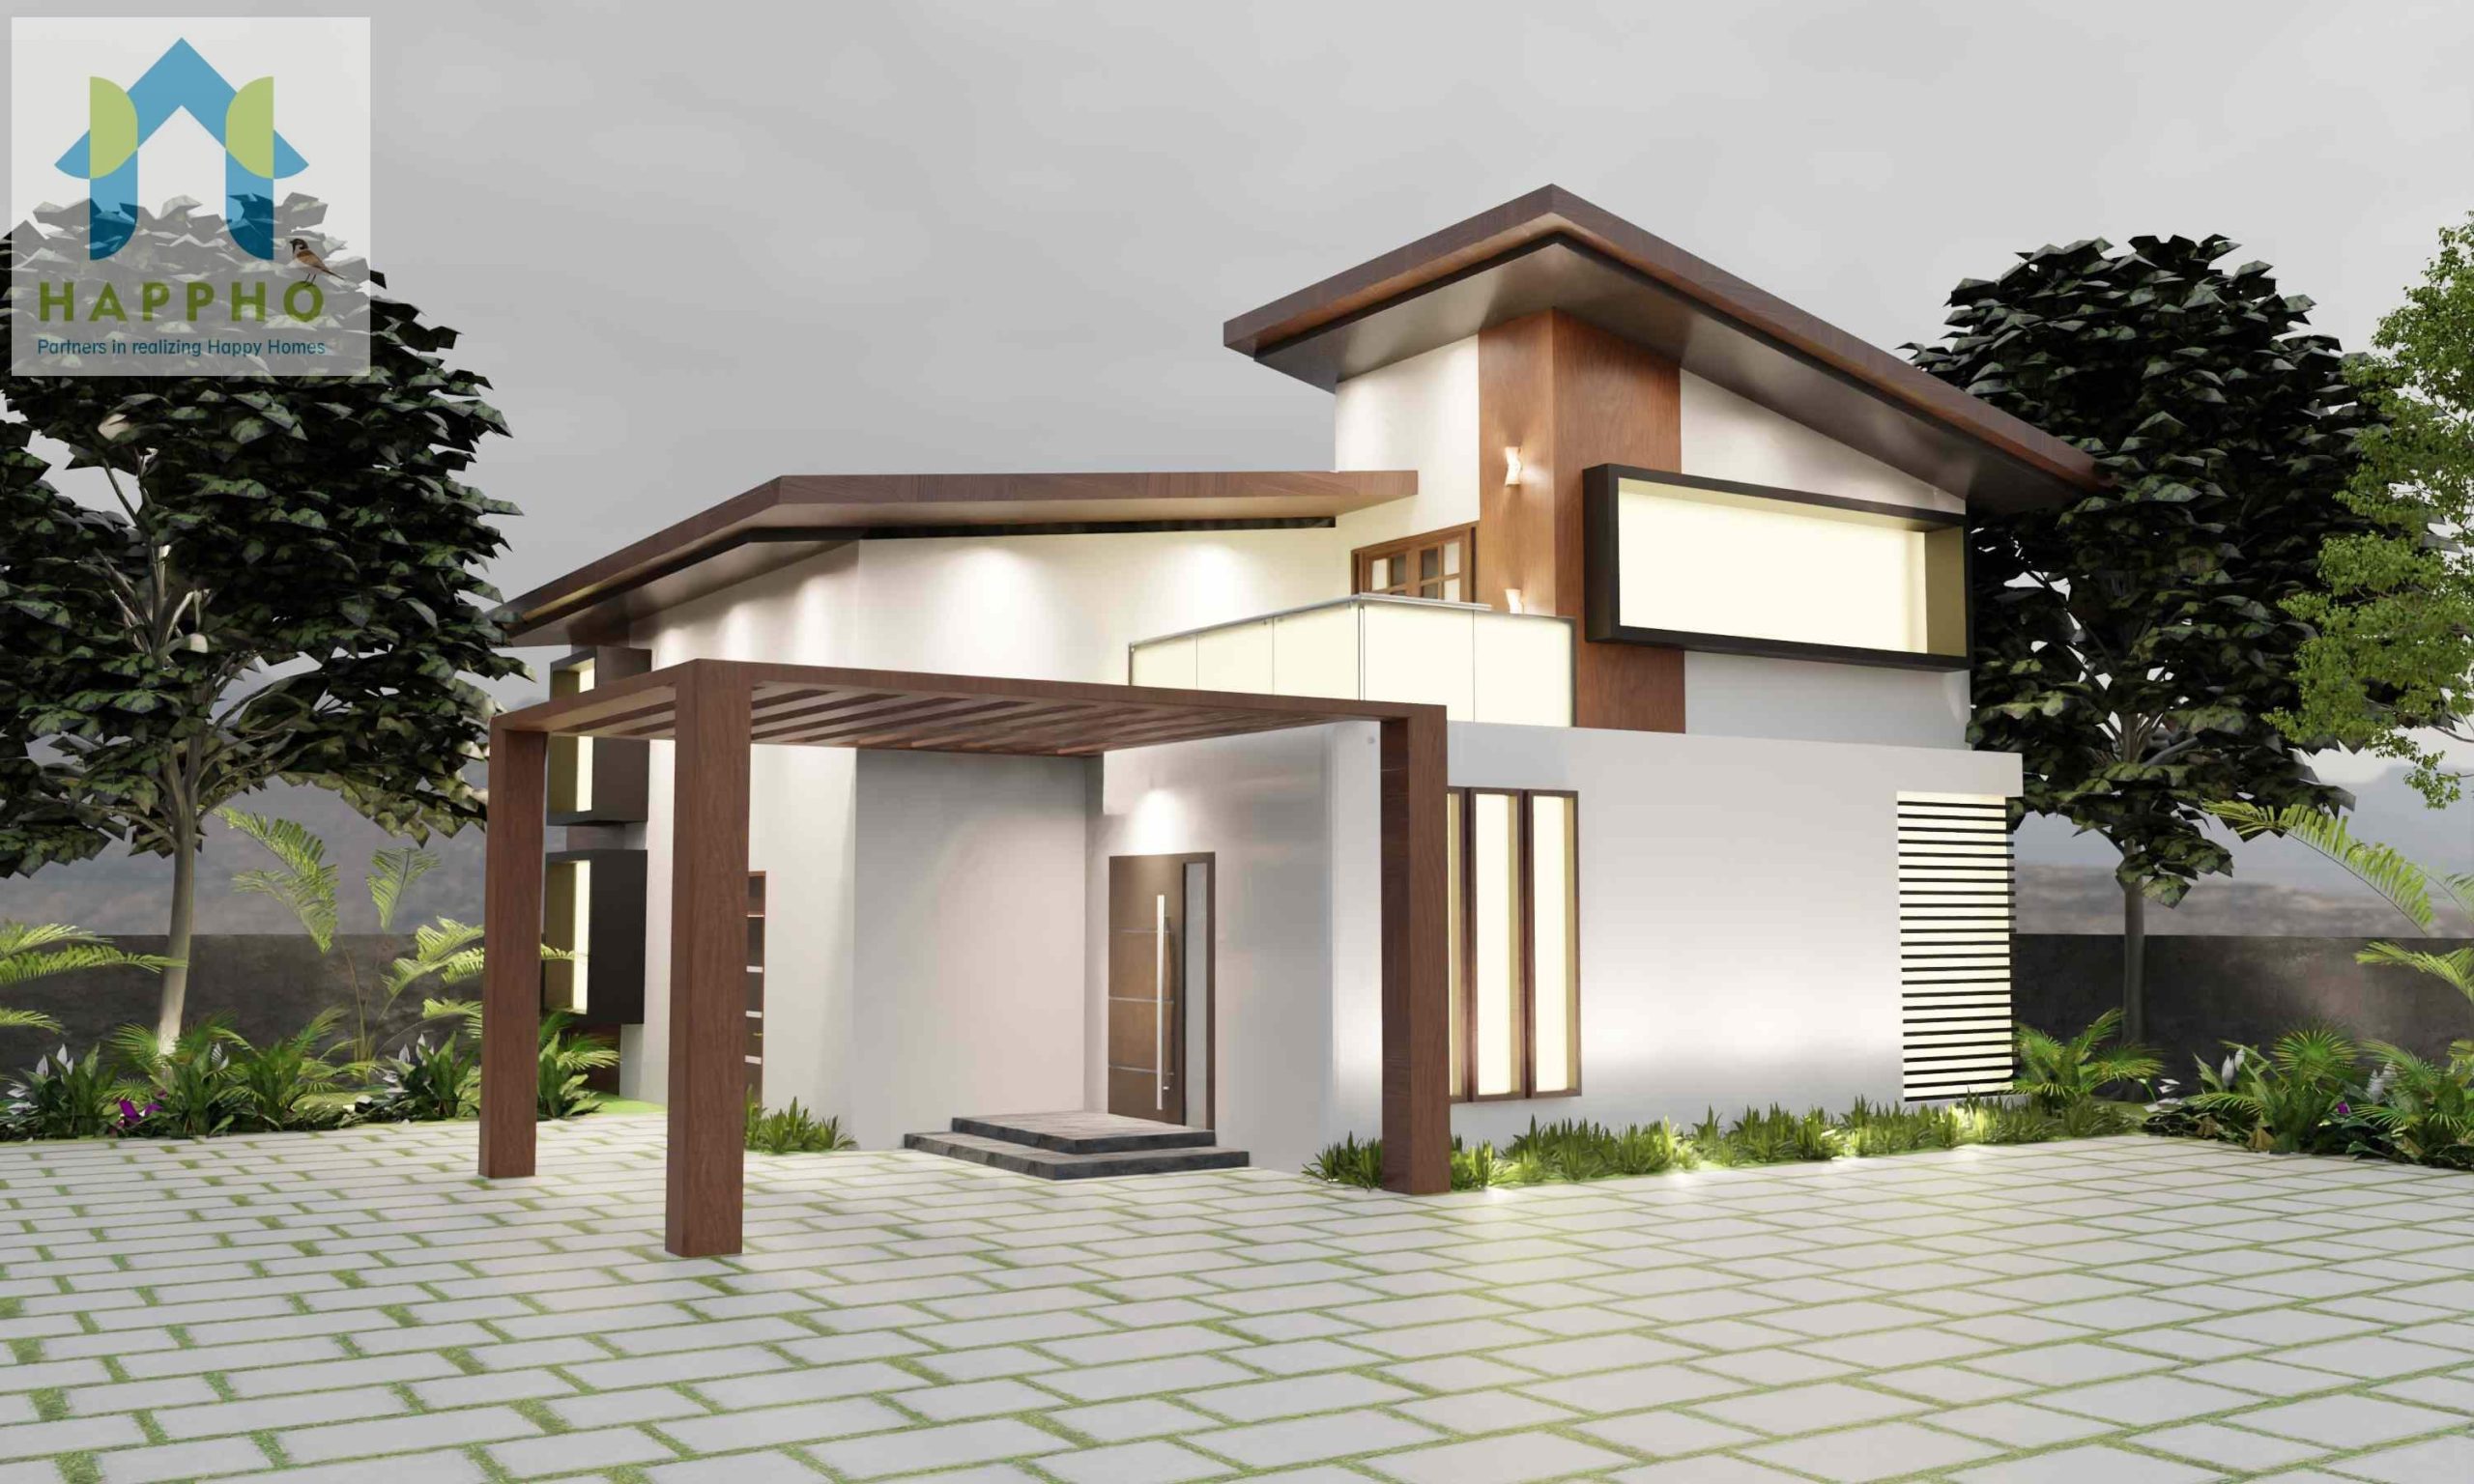 50x50 house plan design